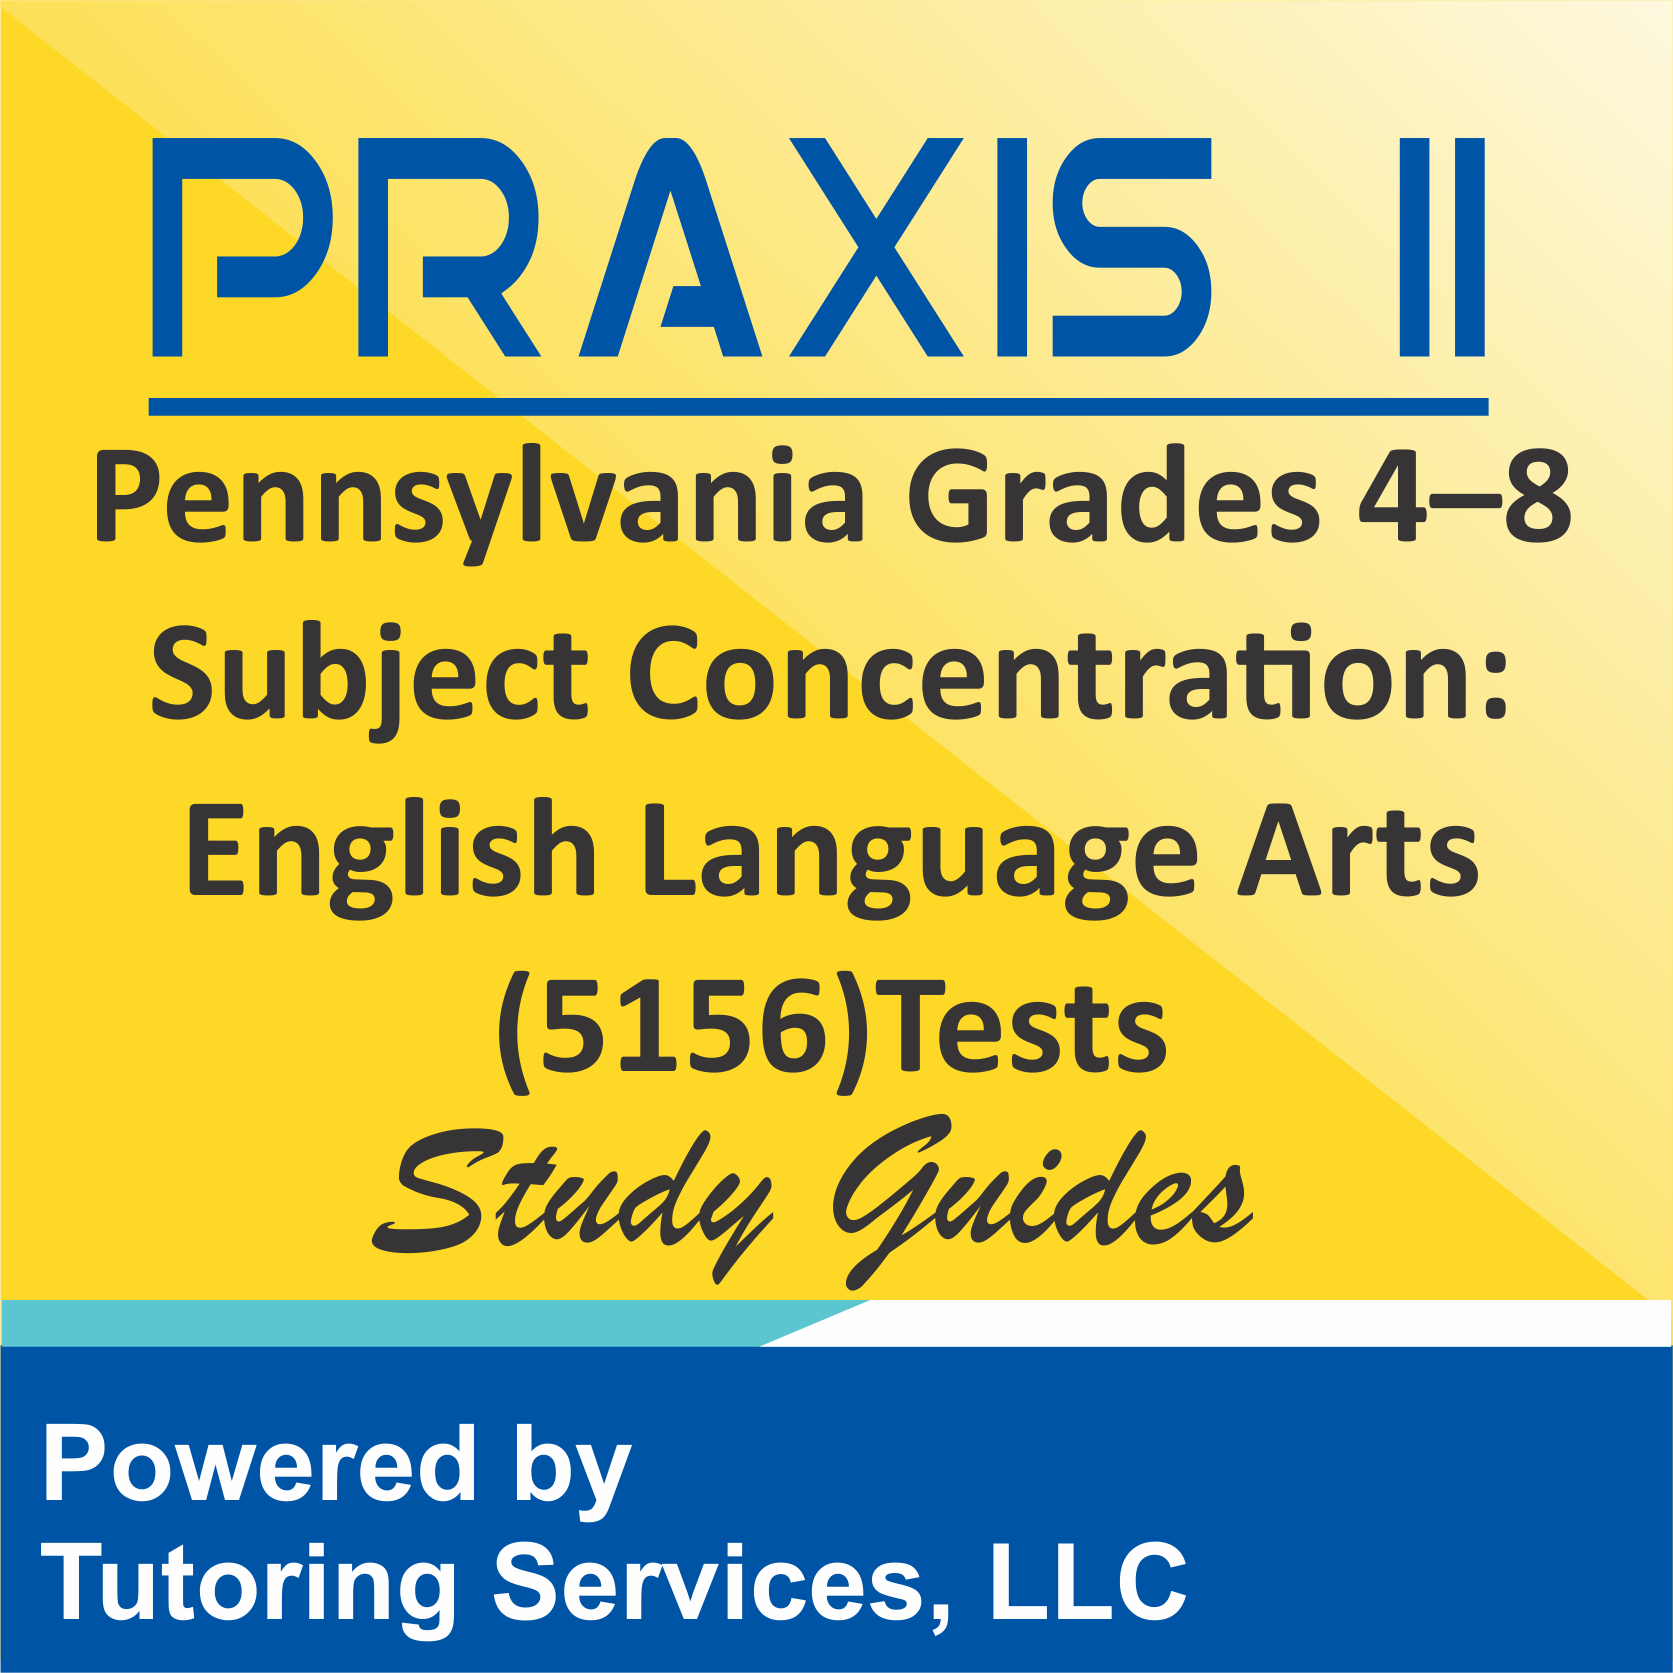 Praxis II Pennsylvania Grades 4-8 Examination Format